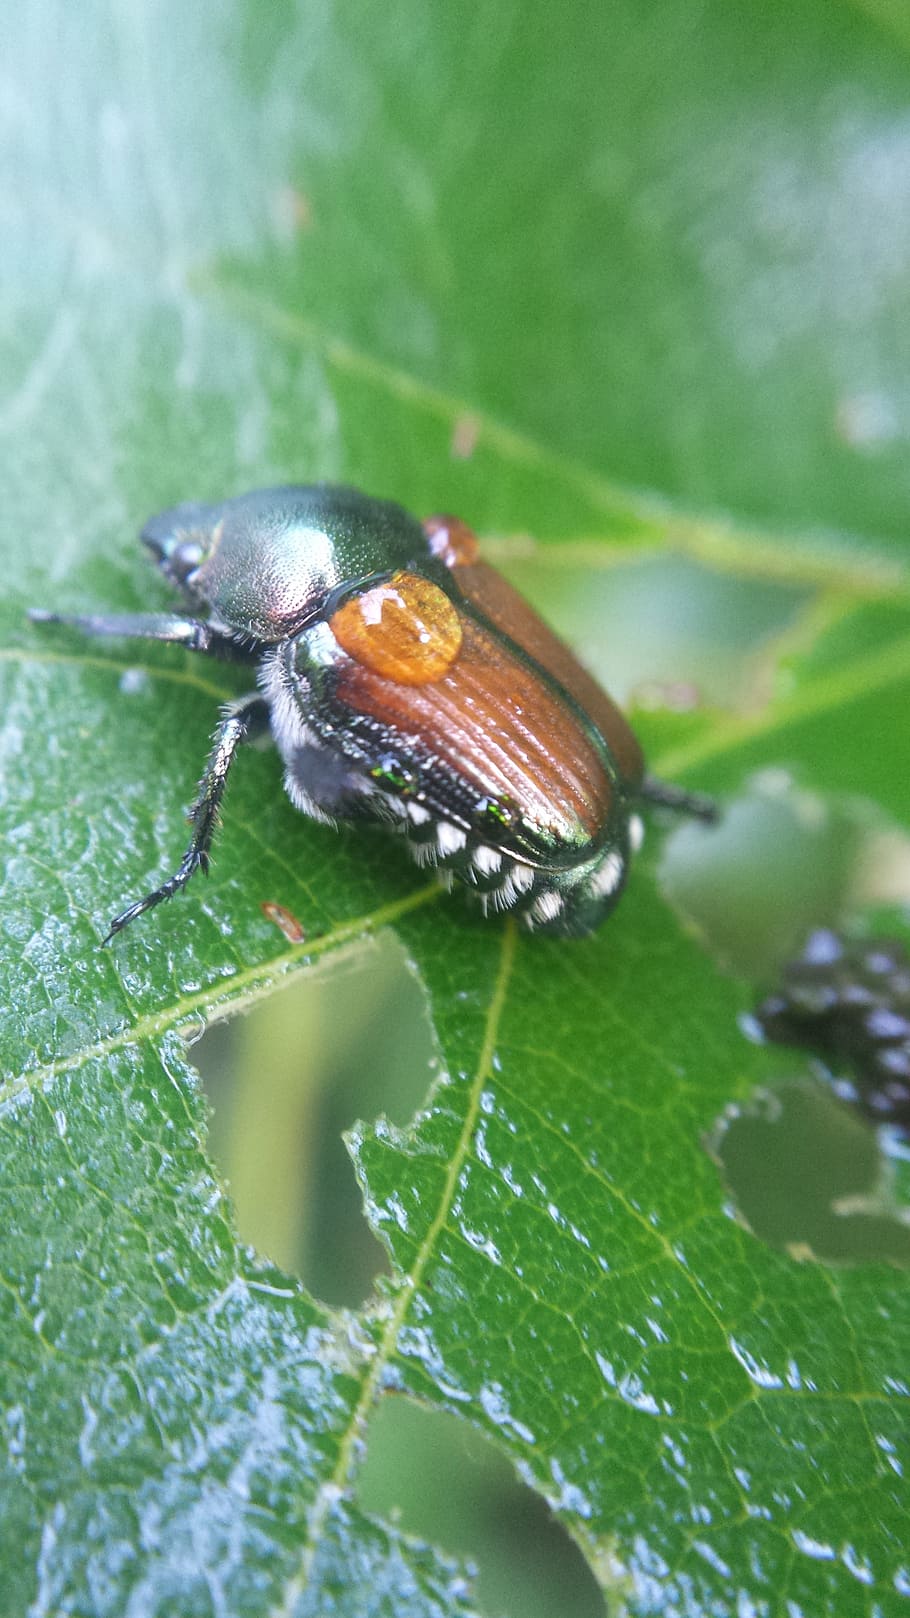 beetle on grapevine., beetle, dew, grapevine, insect, bug, wet, animal wildlife, animal themes, animal